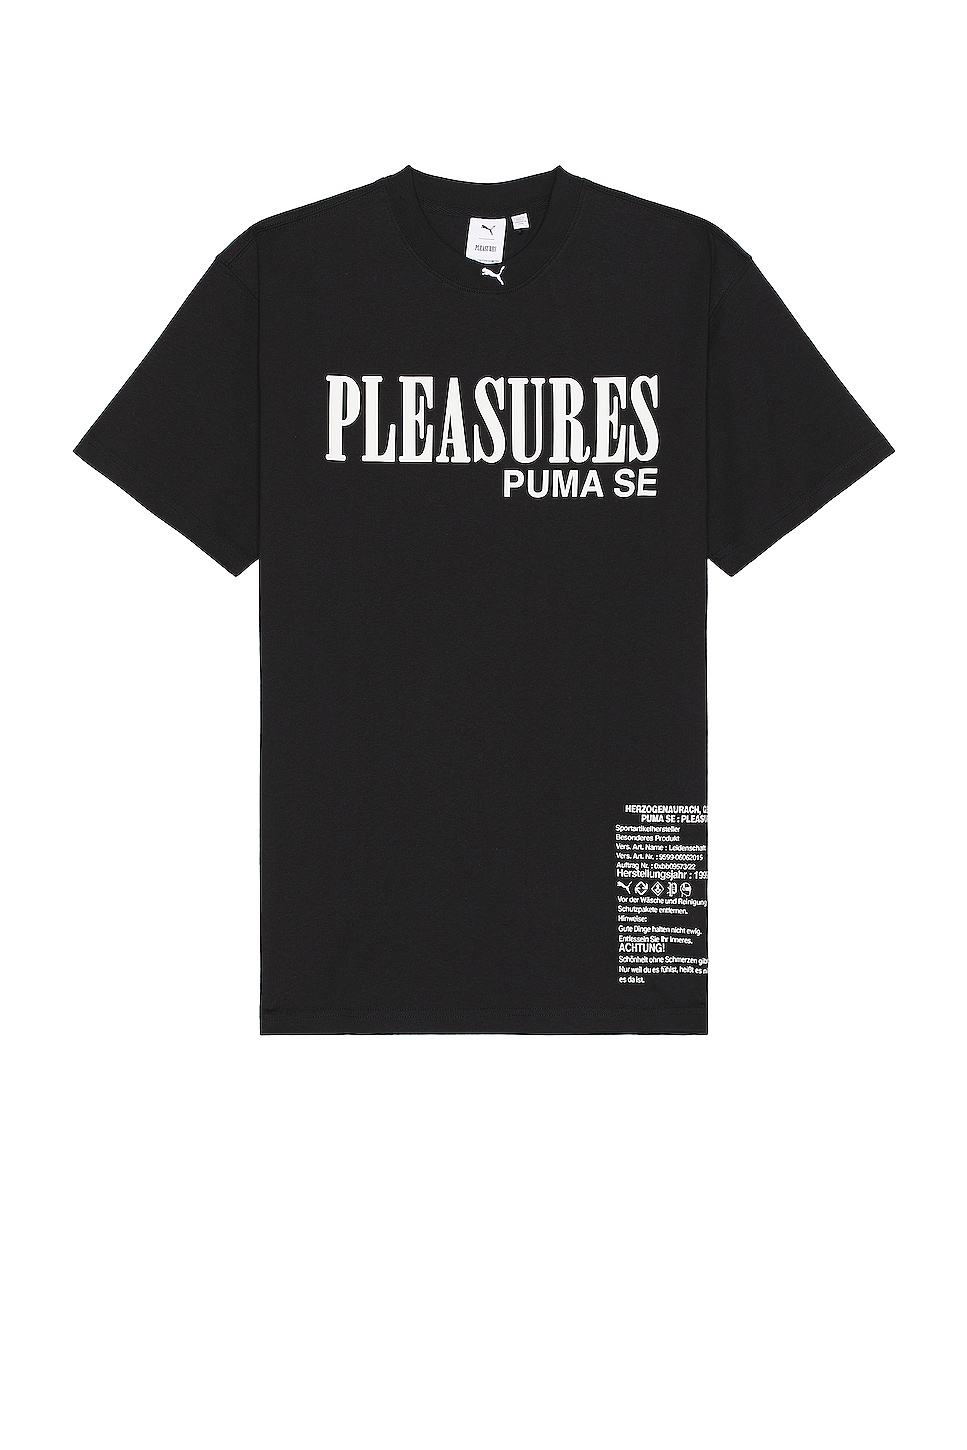 X Pleasures Typo Tee in Black